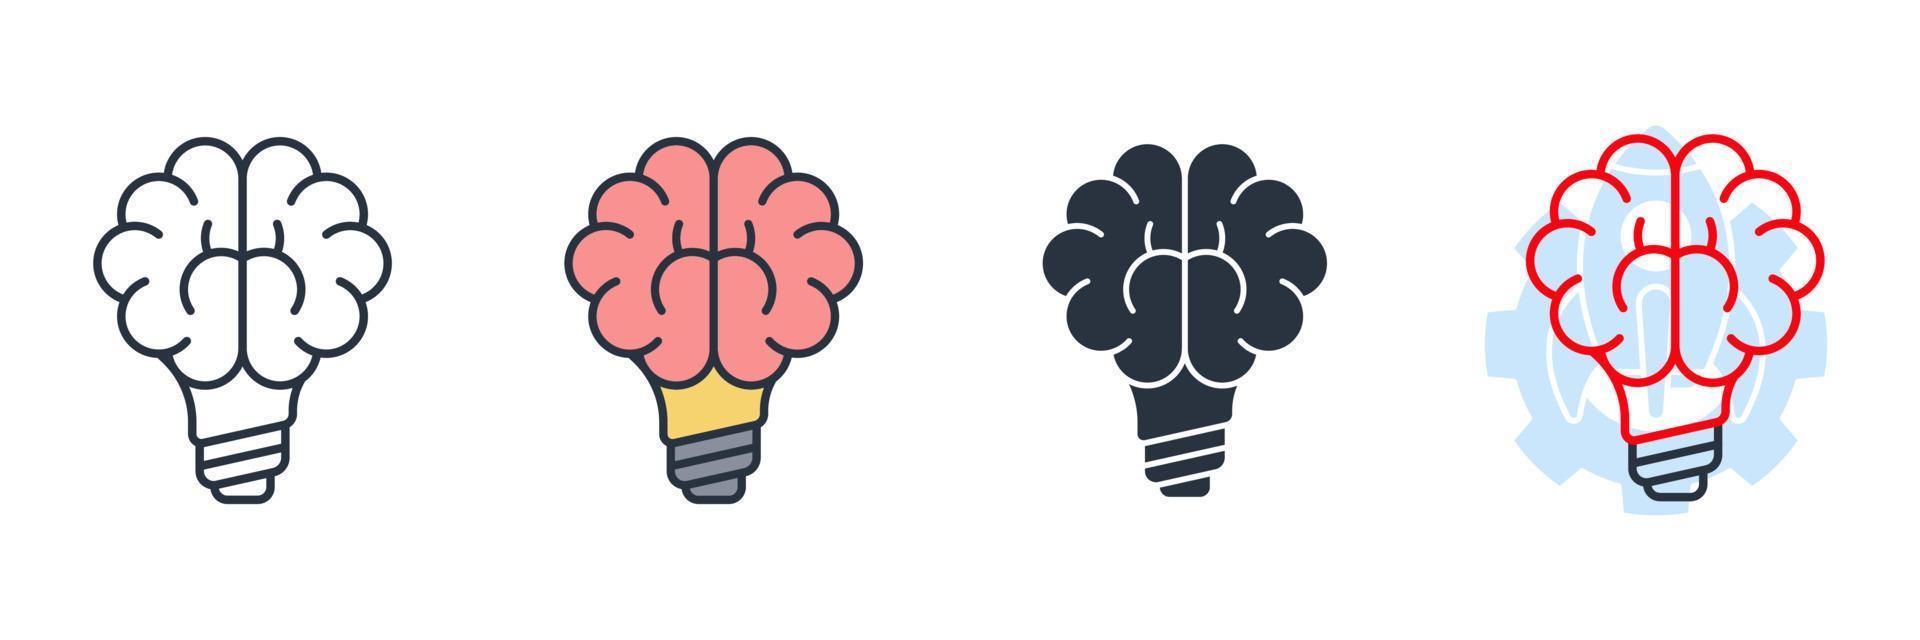 abilities icon logo vector illustration. Creative idea. Brain in lightbulb symbol template for graphic and web design collection